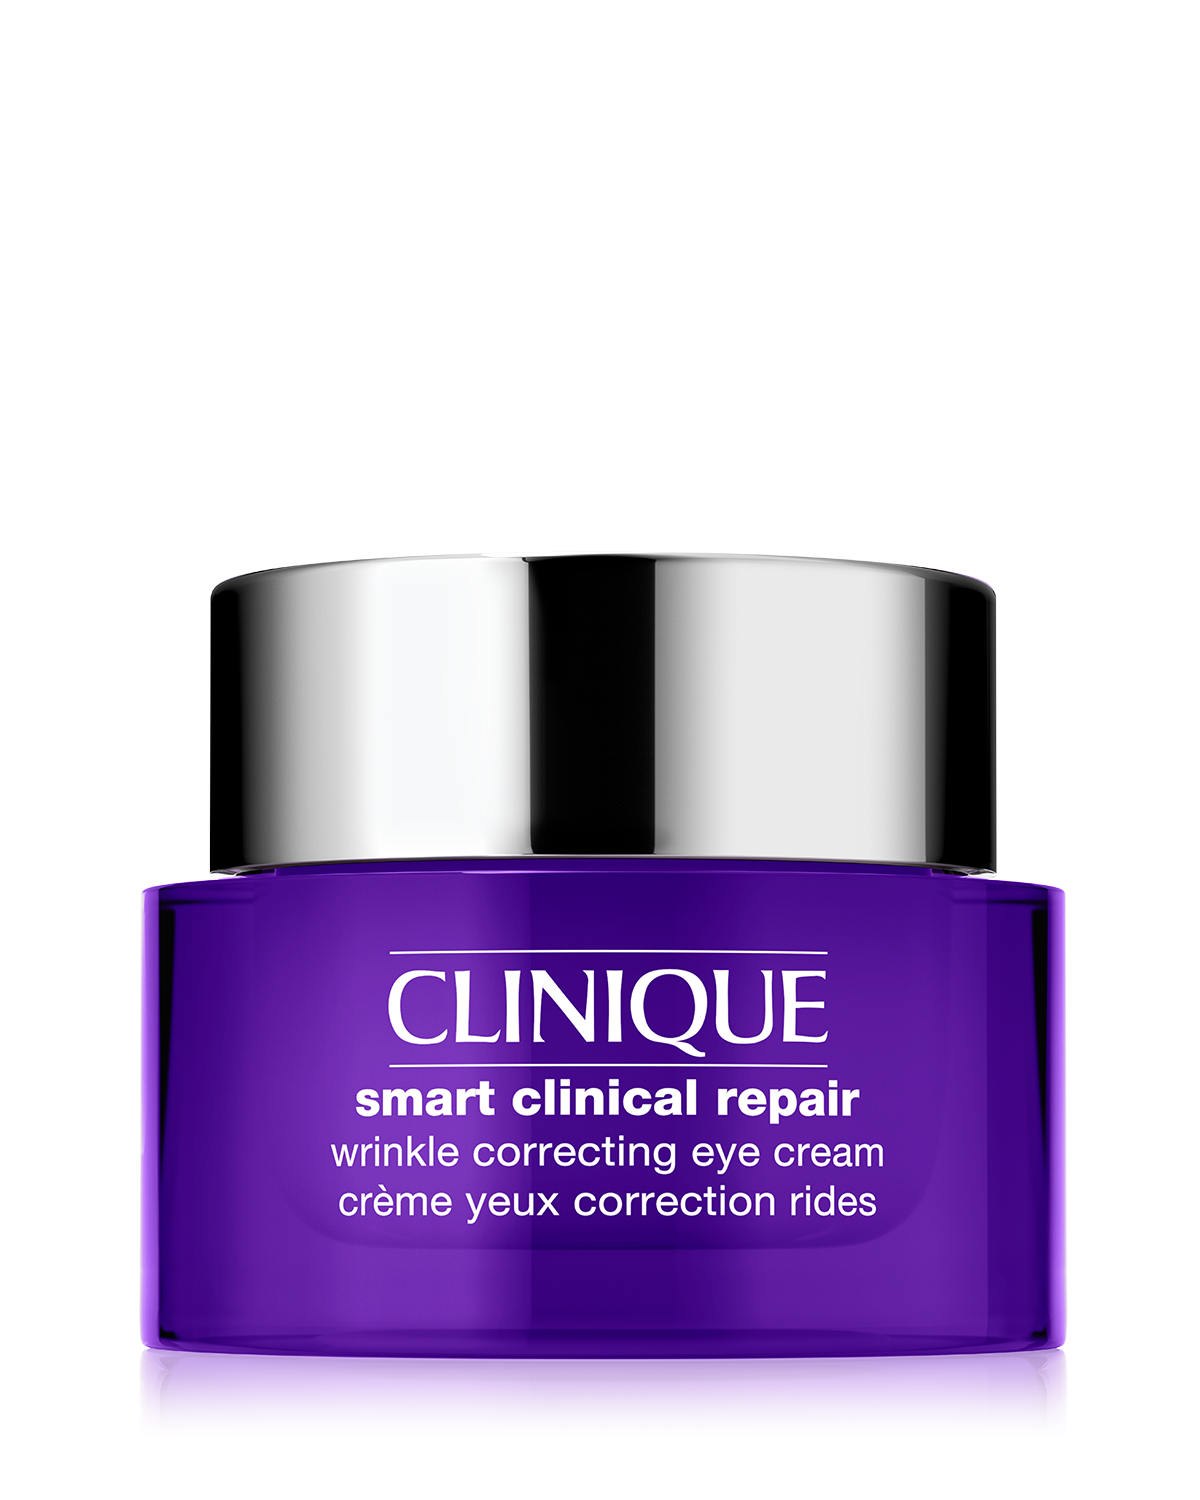 Clinique Smart Clinical Repair Eye Cream ครีมบำรุงรอบดวงตาเพื่อรับมือกับริ้วรอยแห่งวัย  | Clinique Thailand E-Commerce Site